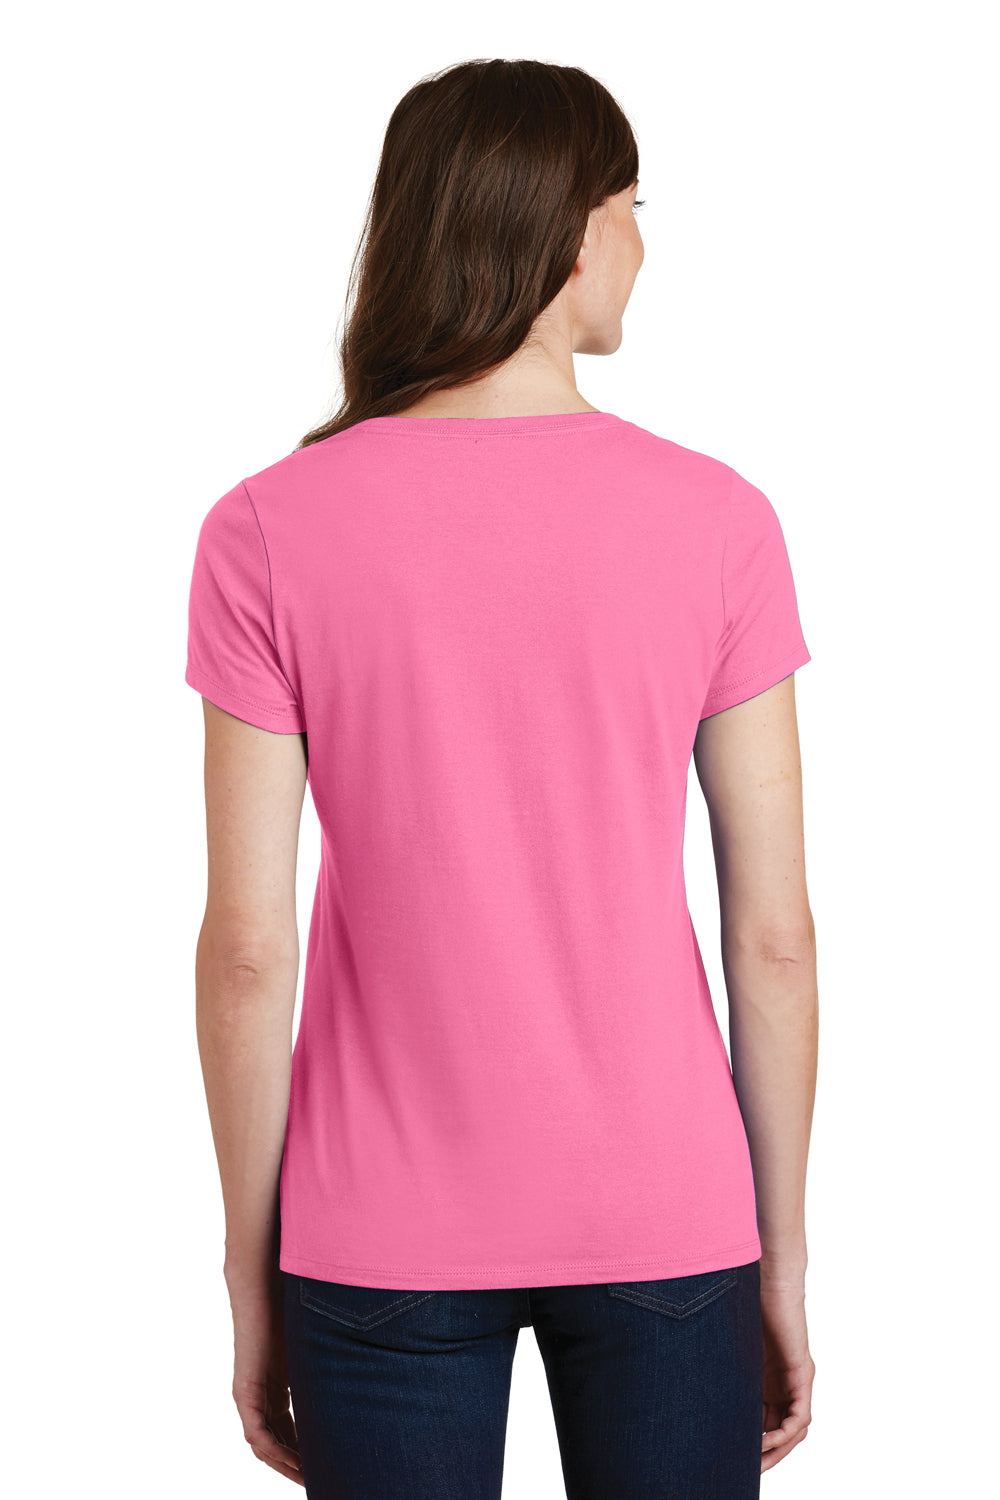 Port & Company LPC450V Womens Fan Favorite Short Sleeve V-Neck T-Shirt Pink Back